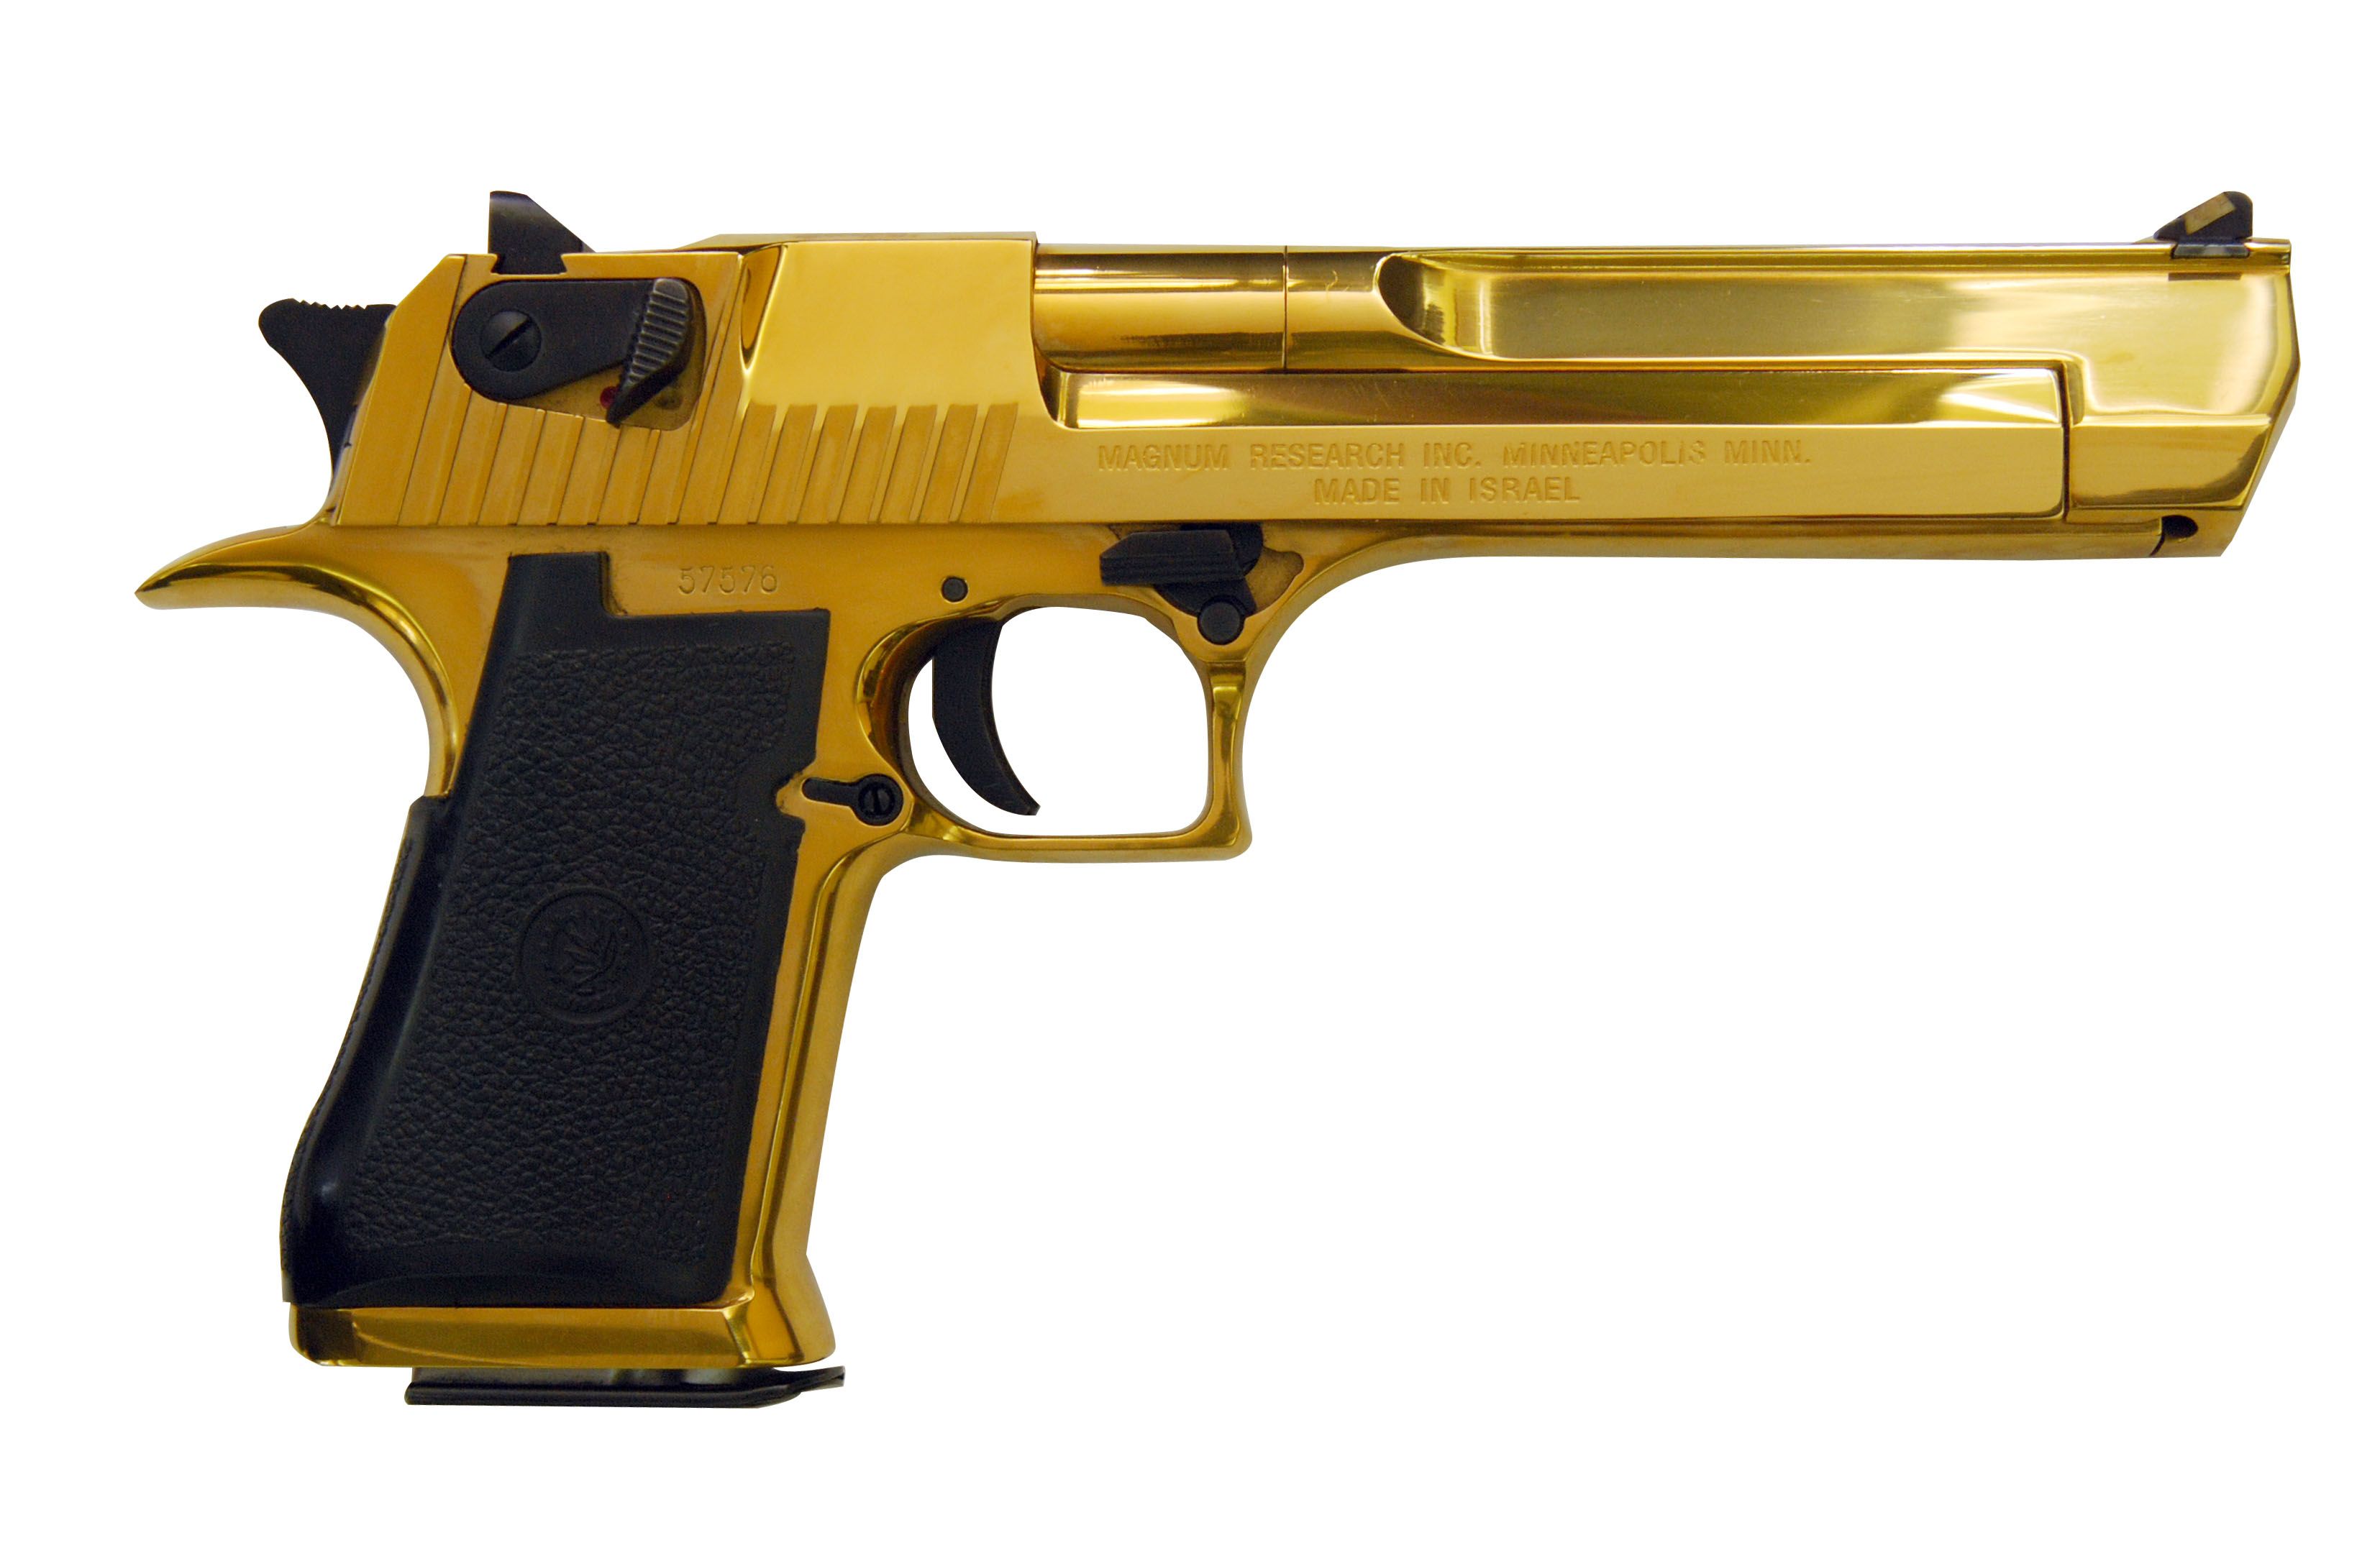 Fake Gold：炫酷的金色手枪设计 - 普象网